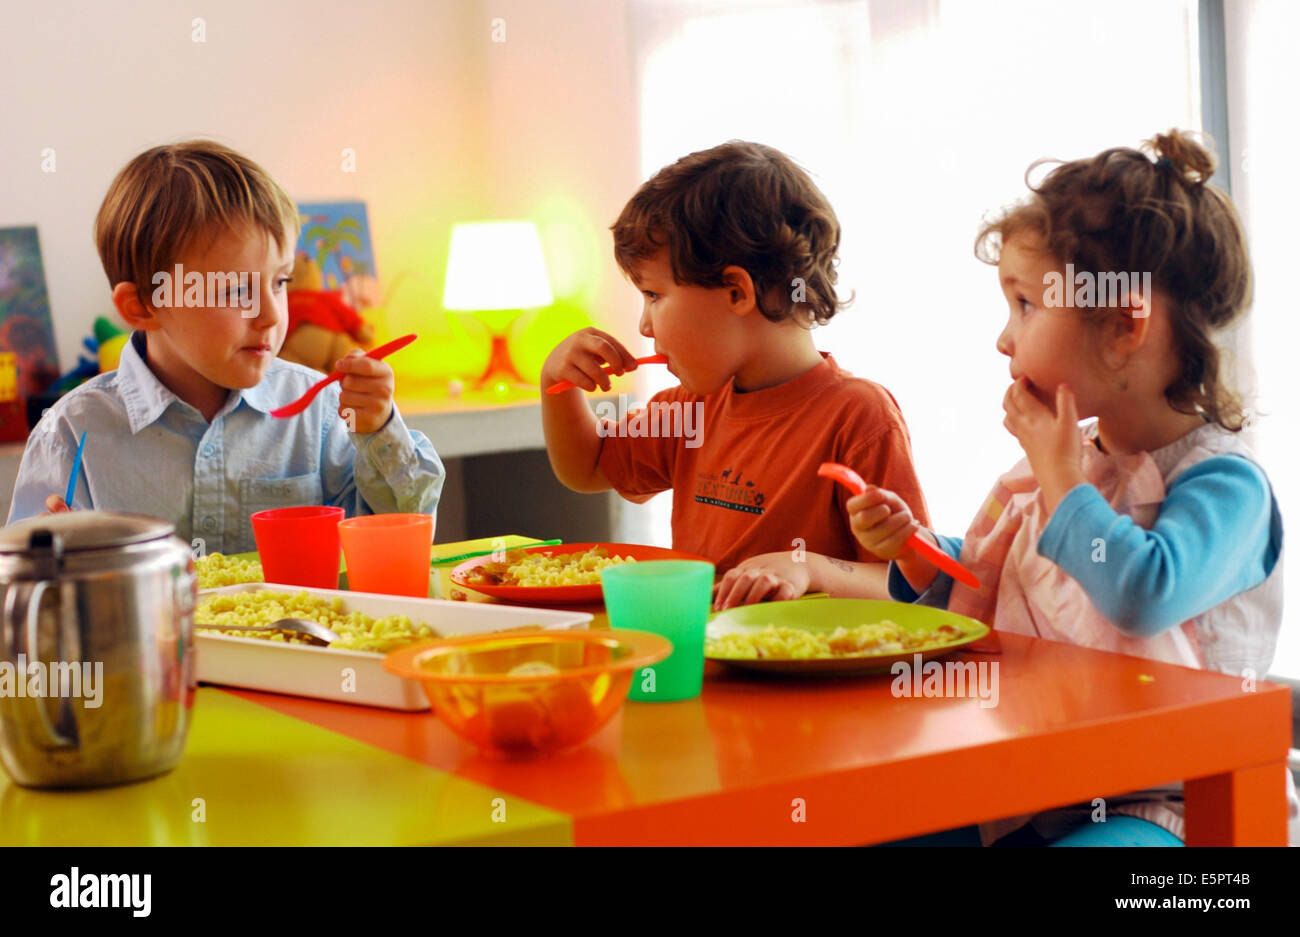 https://c8.alamy.com/comp/E5PT4B/children-having-lunch-at-the-school-canteen-E5PT4B.jpg